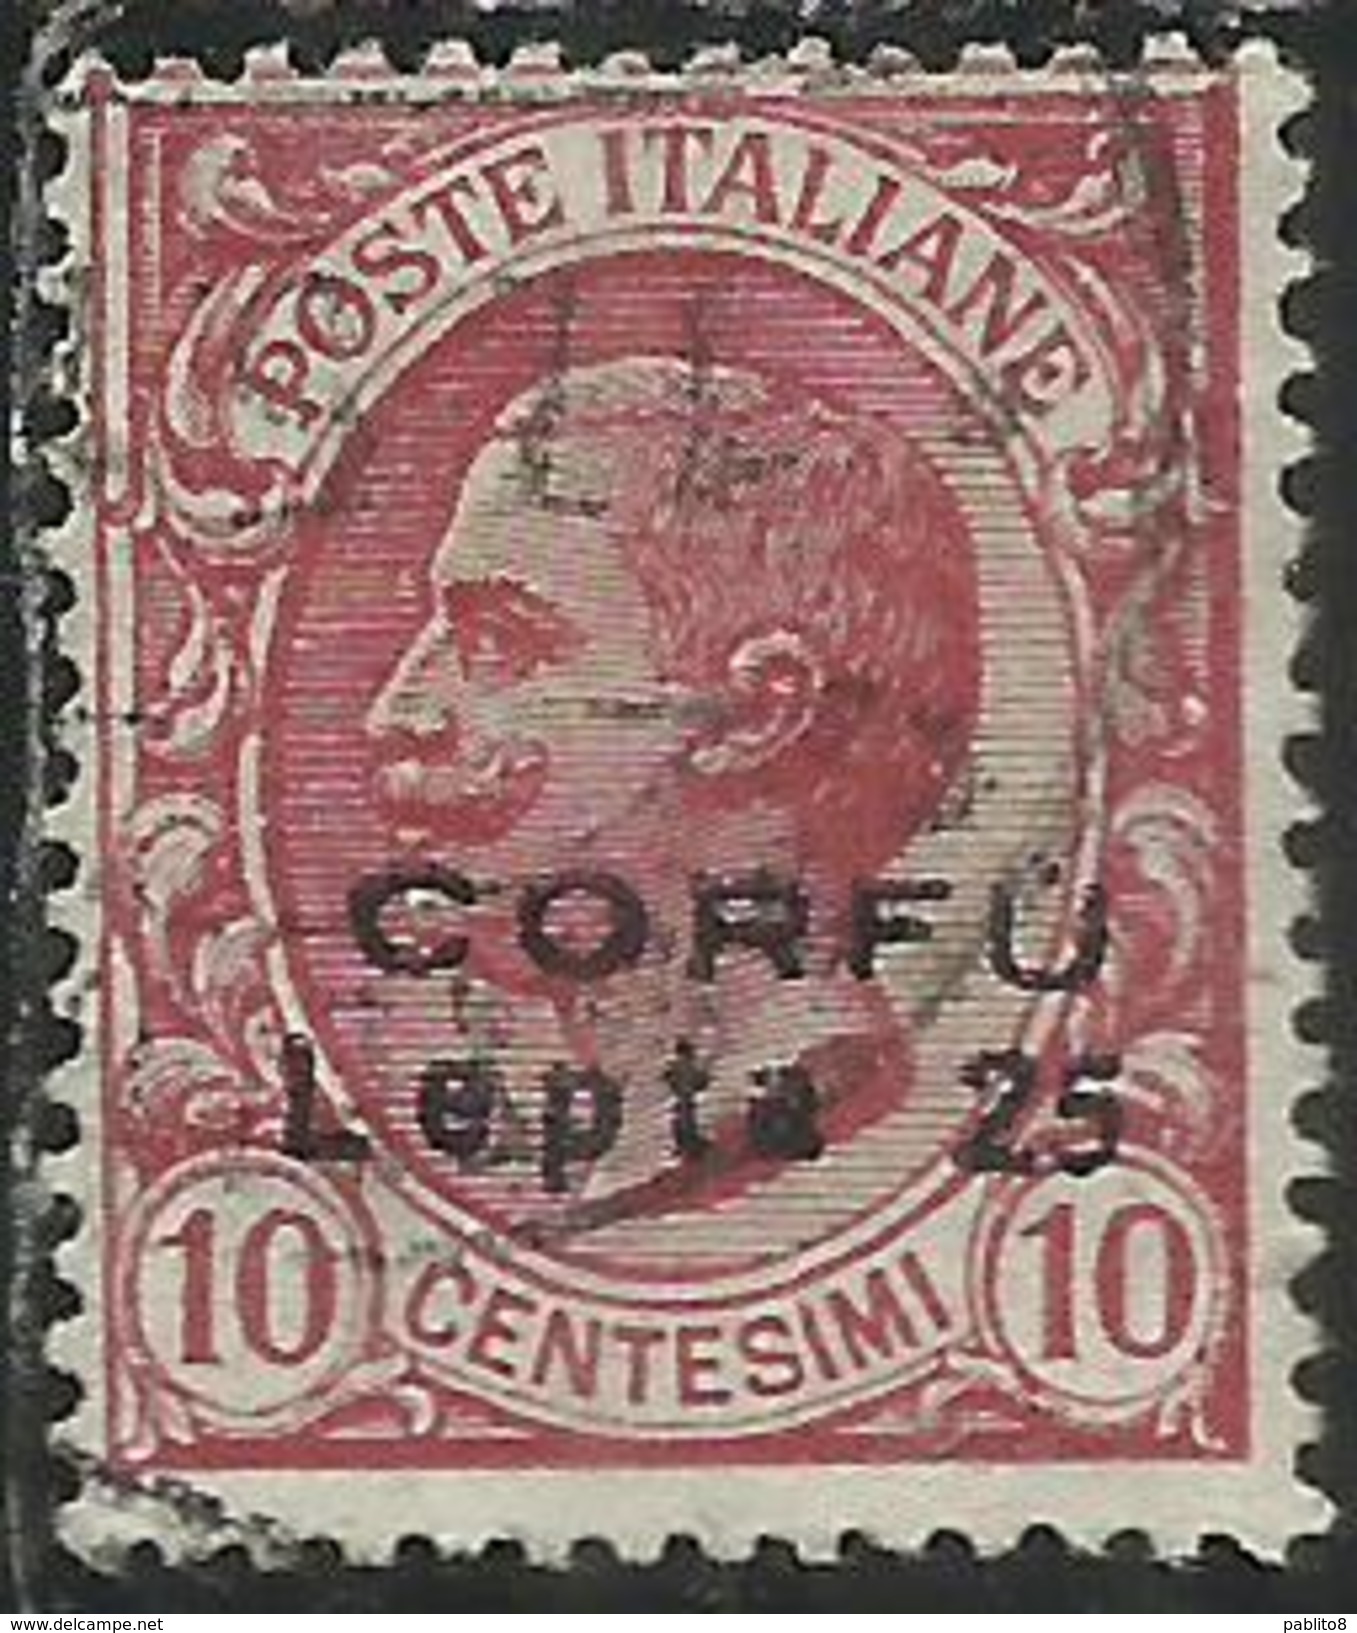 CORFU´ 1923 SOPRASTAMPATO D´ITALIA ITALY OVERPRINTED SURCHARGE 25 LEPTA SU 10 CENT. USED - Corfou